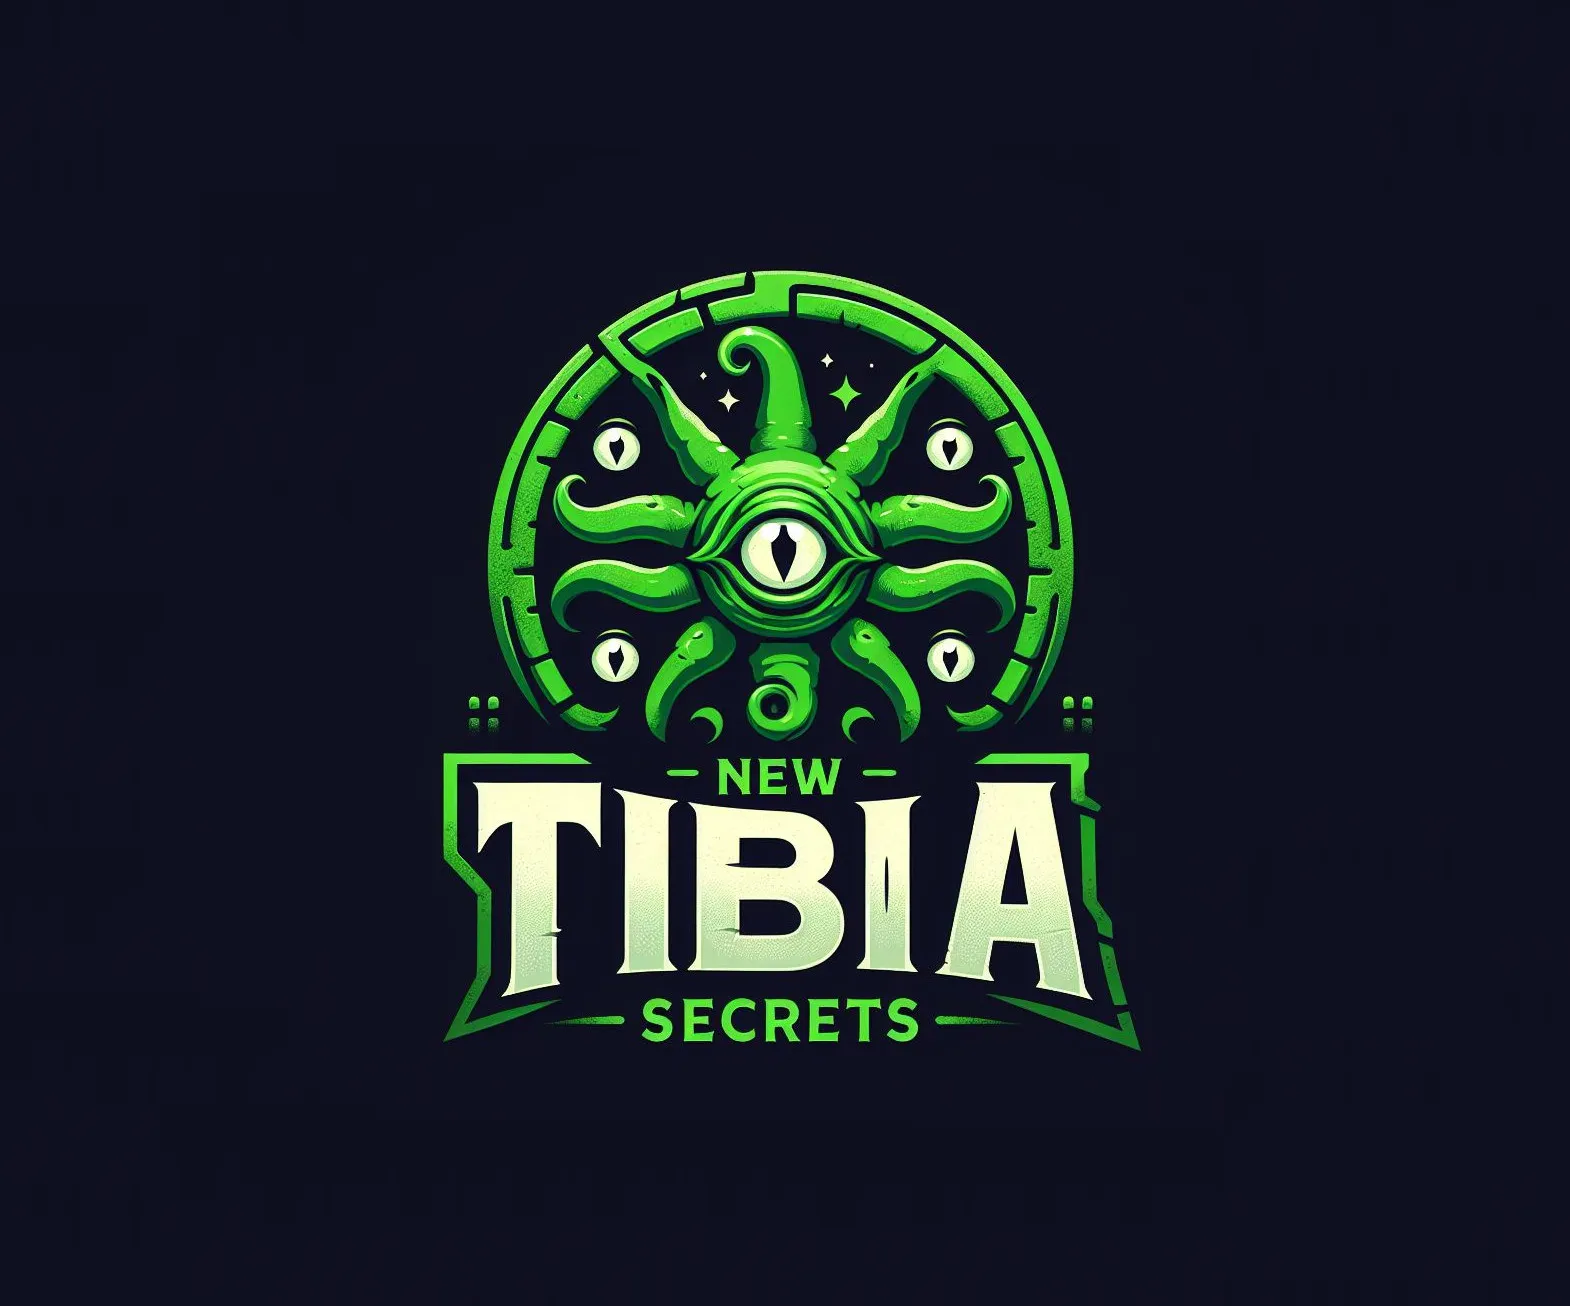 New TibiaSecrets has arrived